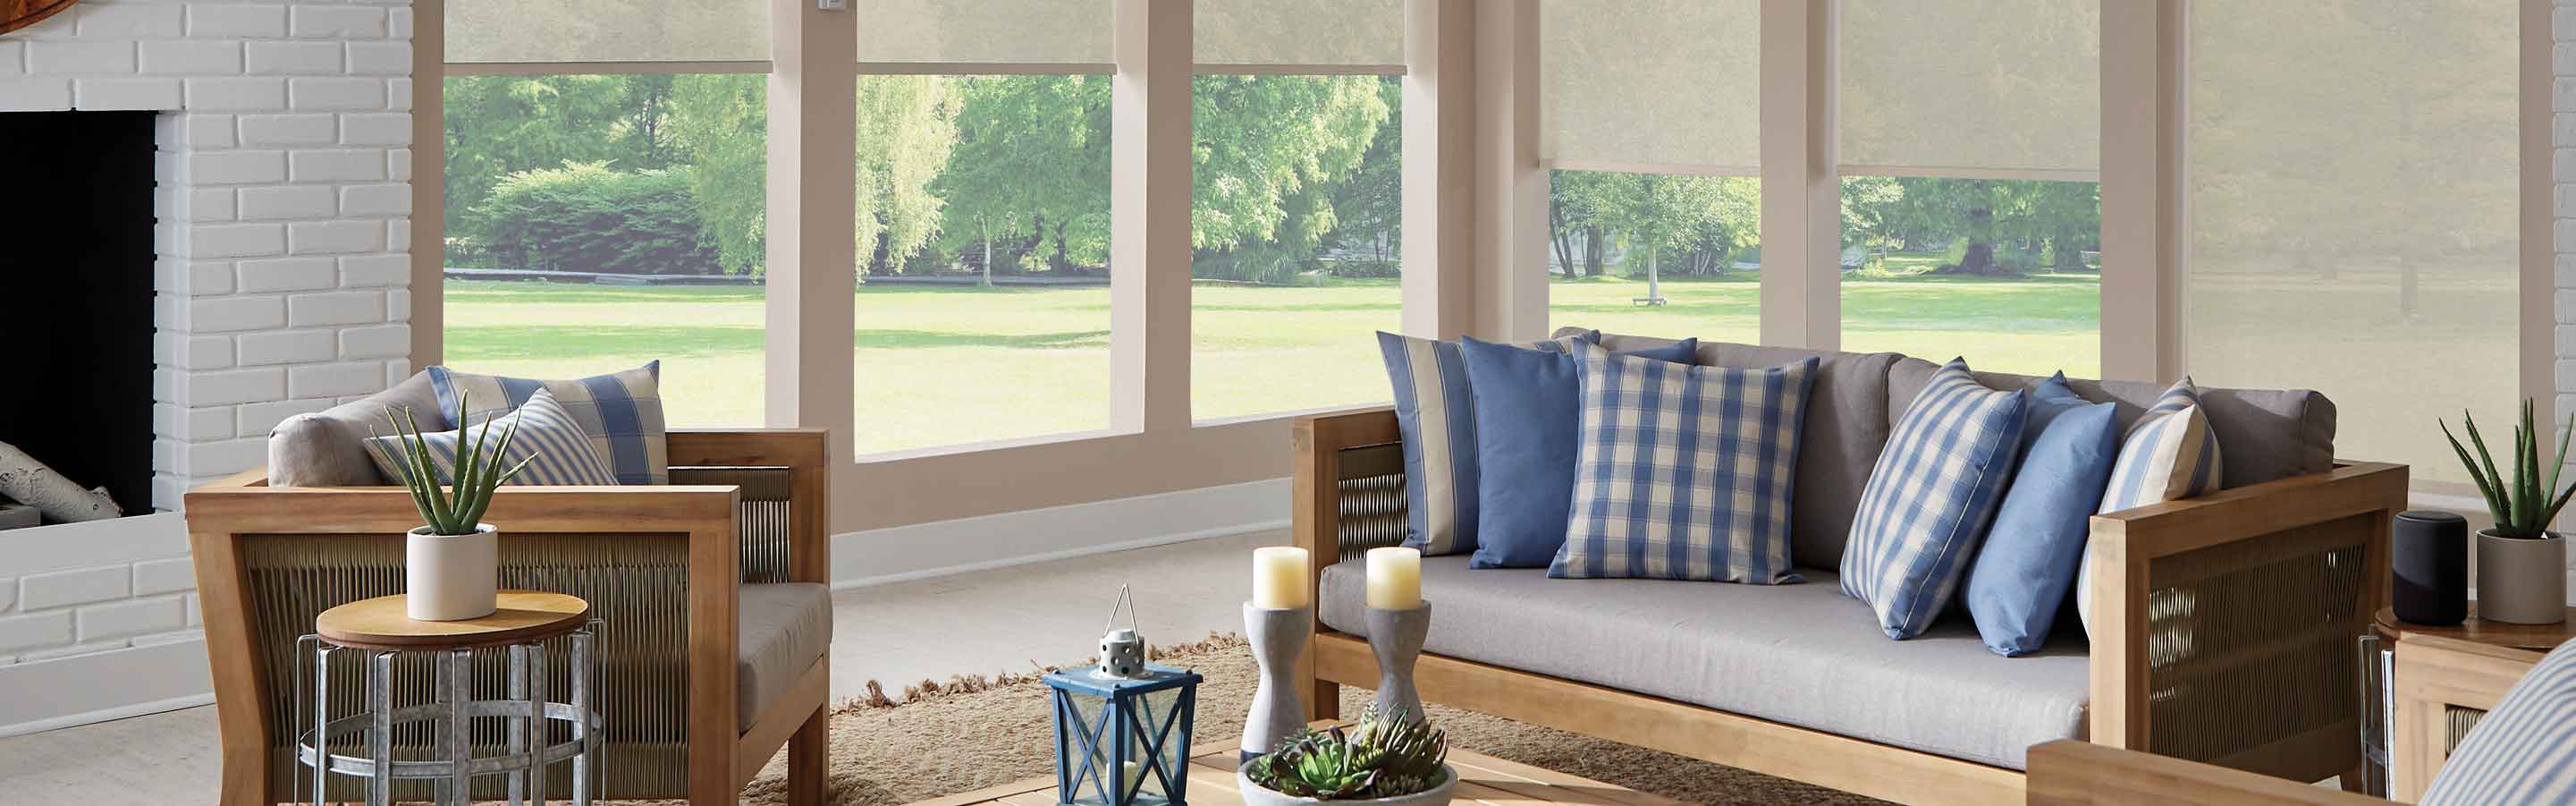 beige window treatments in living room